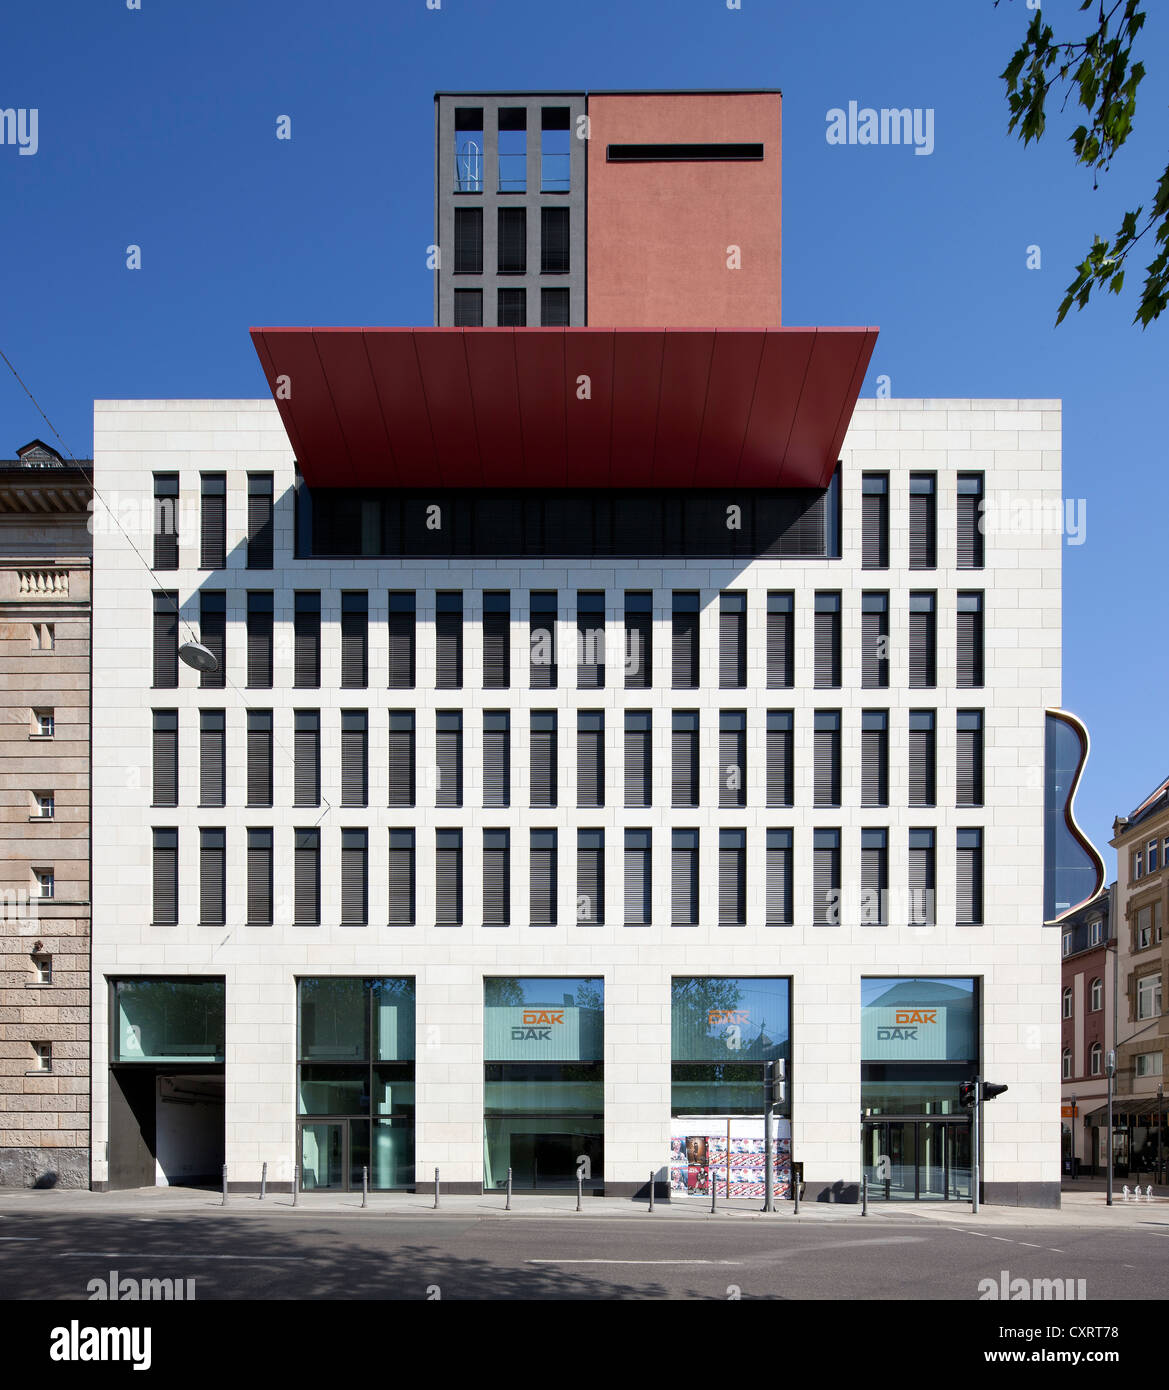 Immeuble commercial et de bureau, Kirchgasse, Rheinstrasse, Wiesbaden, Hesse, Germany, Europe, PublicGround Banque D'Images